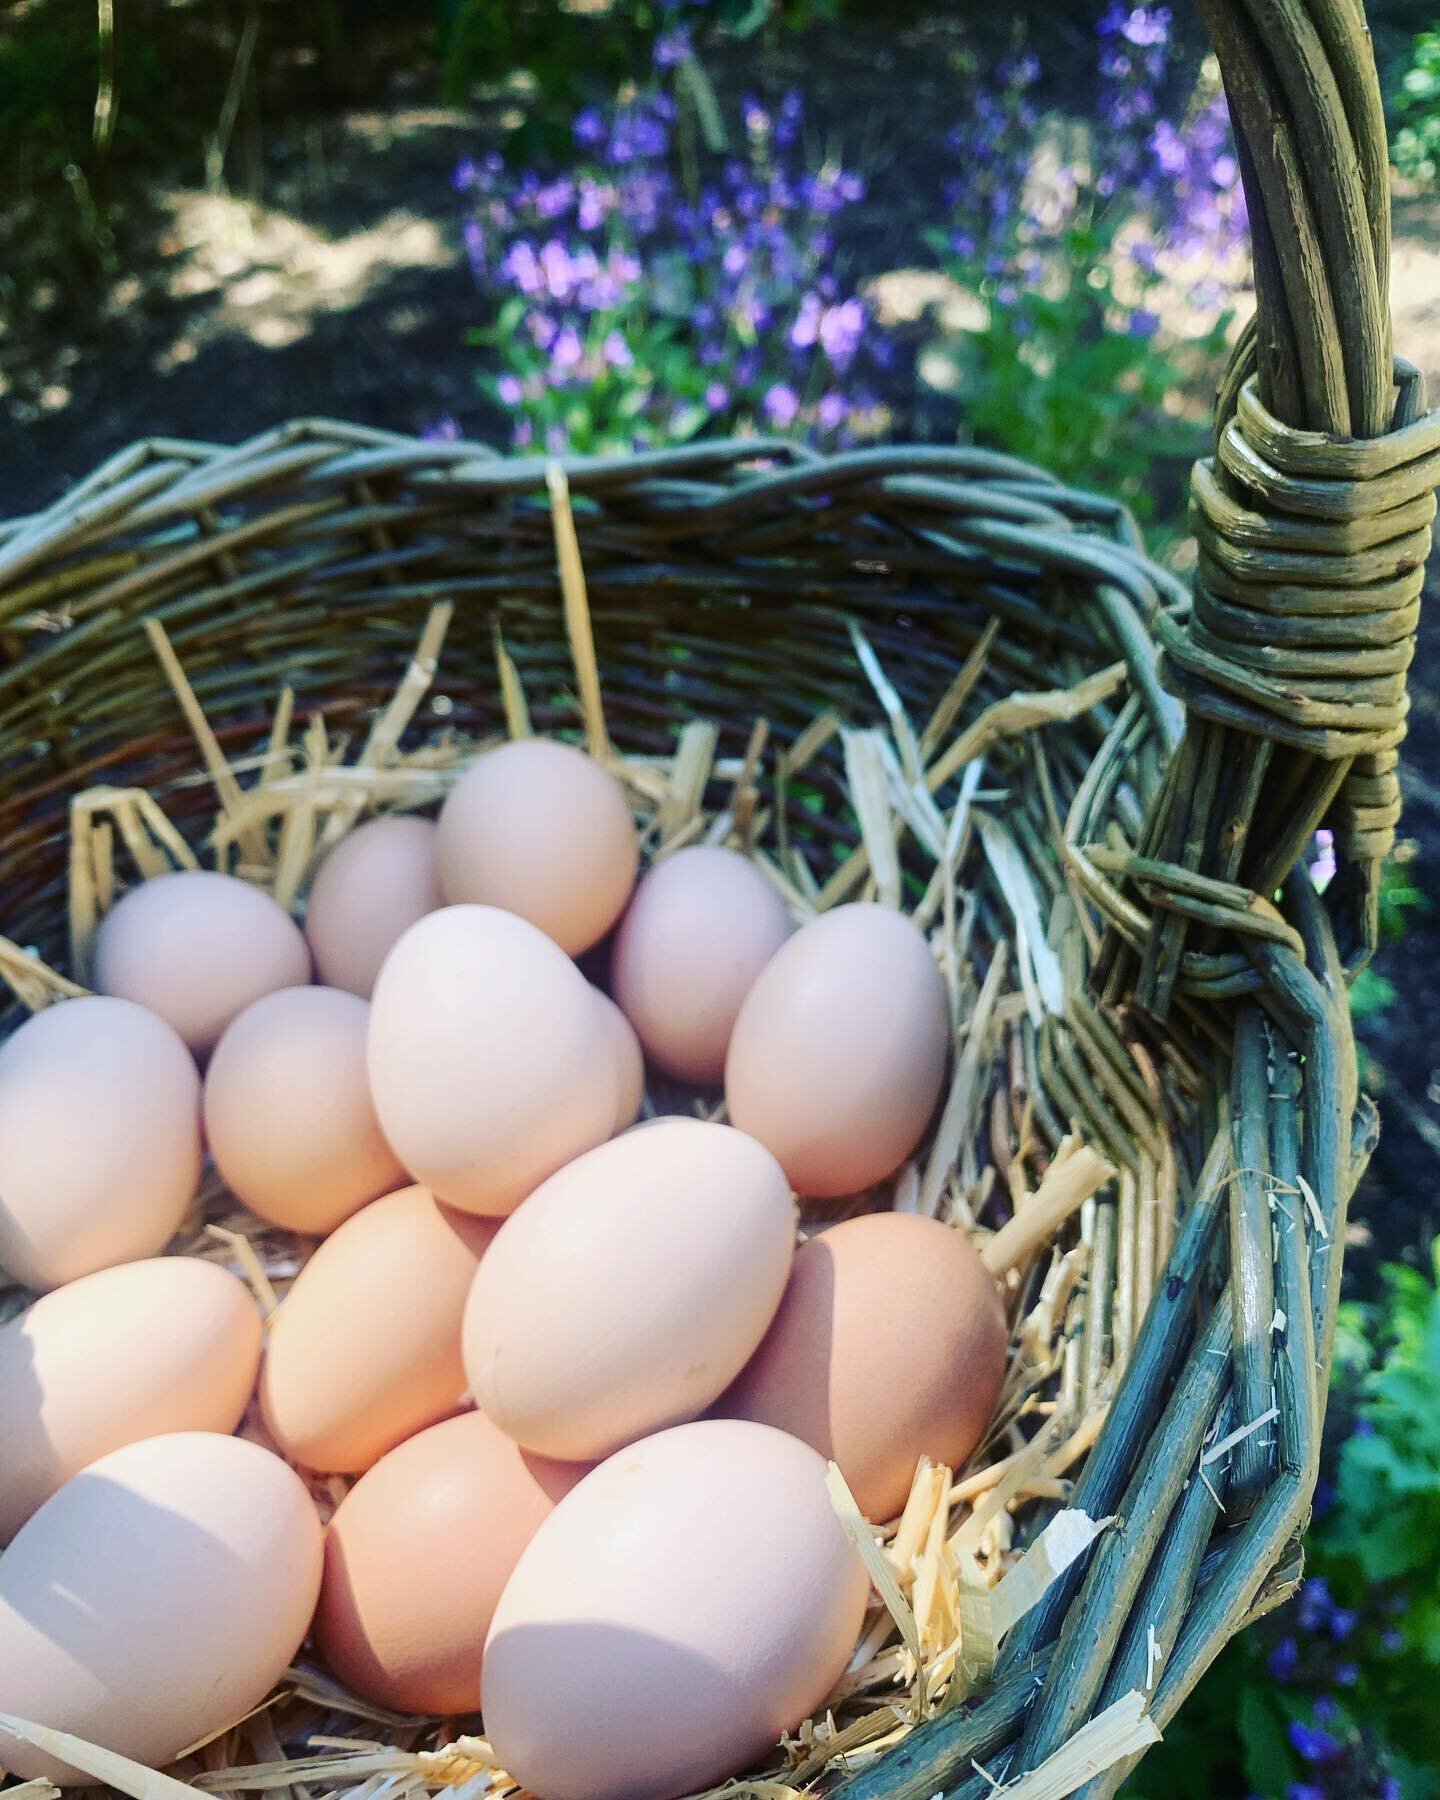 Thank you @joslirocks for the amazing homemade willow basket! Makes my morning egg collecting for our baking that much more pleasant 💜 #eatatsolomonrose #organic #lovemyhens💕🐓 #handwovenbasket #summergardens #galianoisland